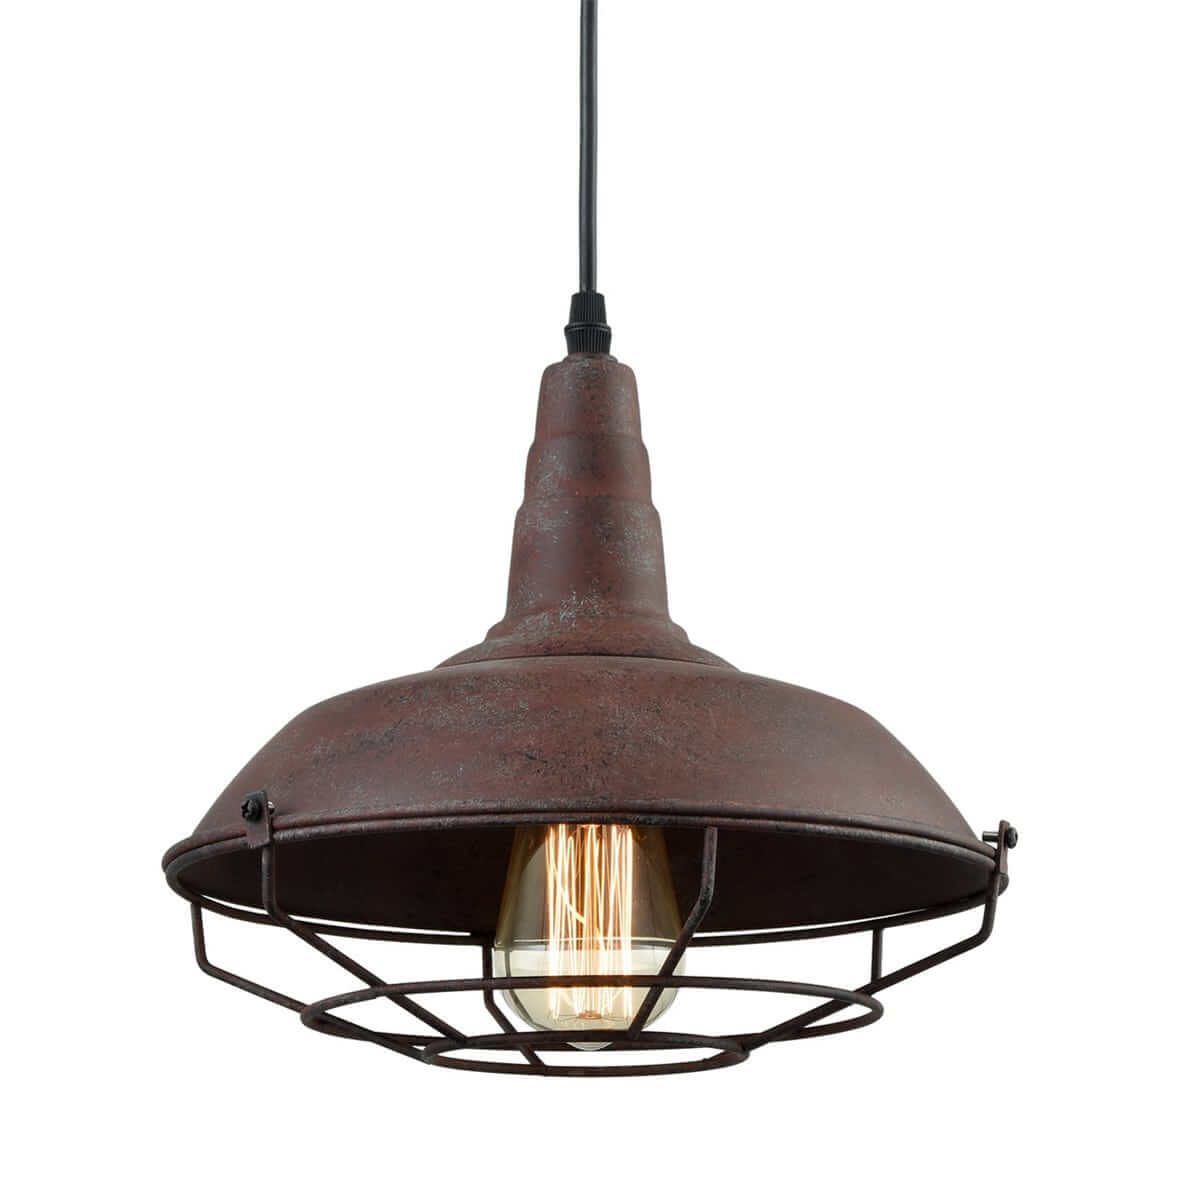 Antique Rustic Iron Vintage Barn Ceiling Lamp Industrial Pendant Indoor Light 